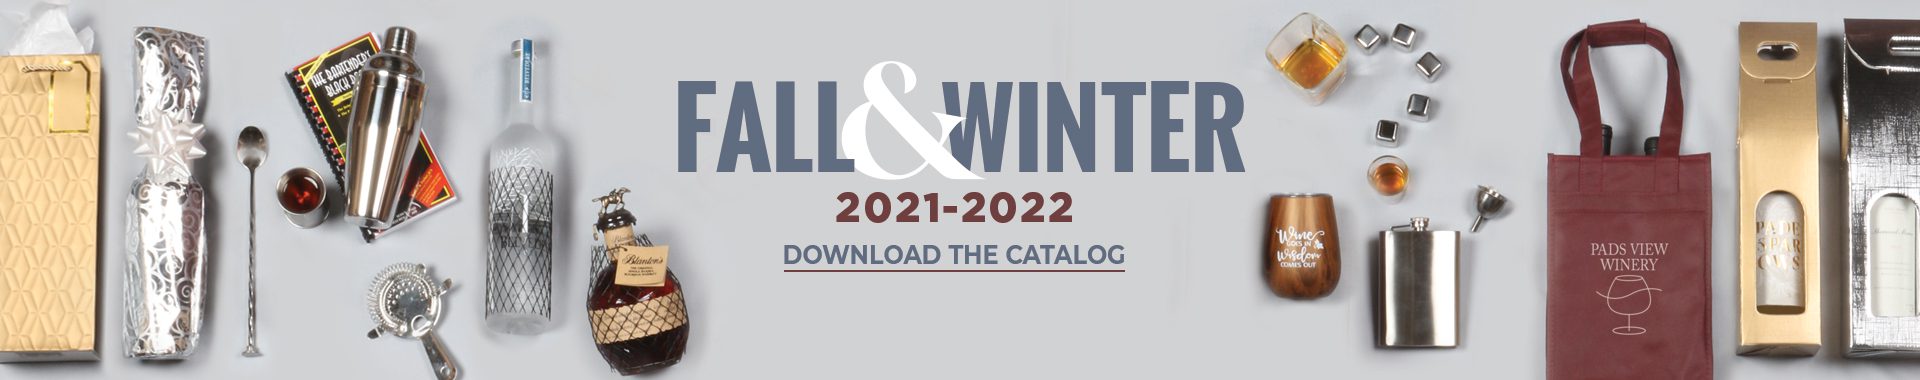 fall winter 2021-2022 catalog